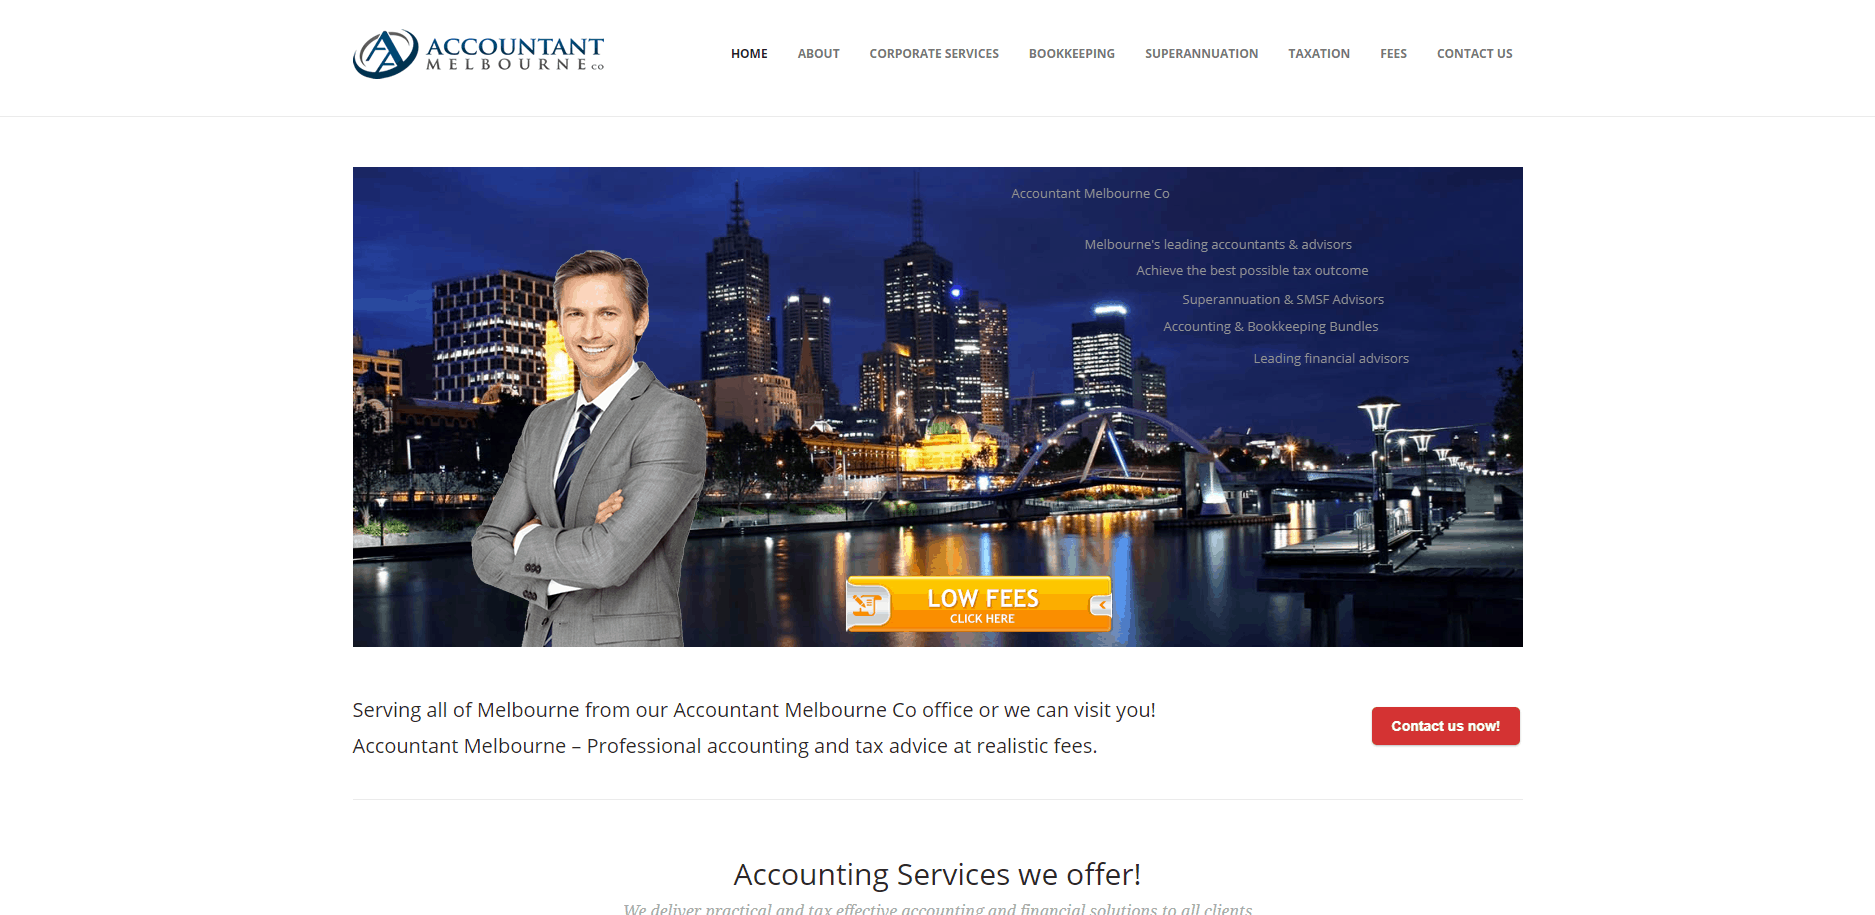 Accountant Melbourne Co